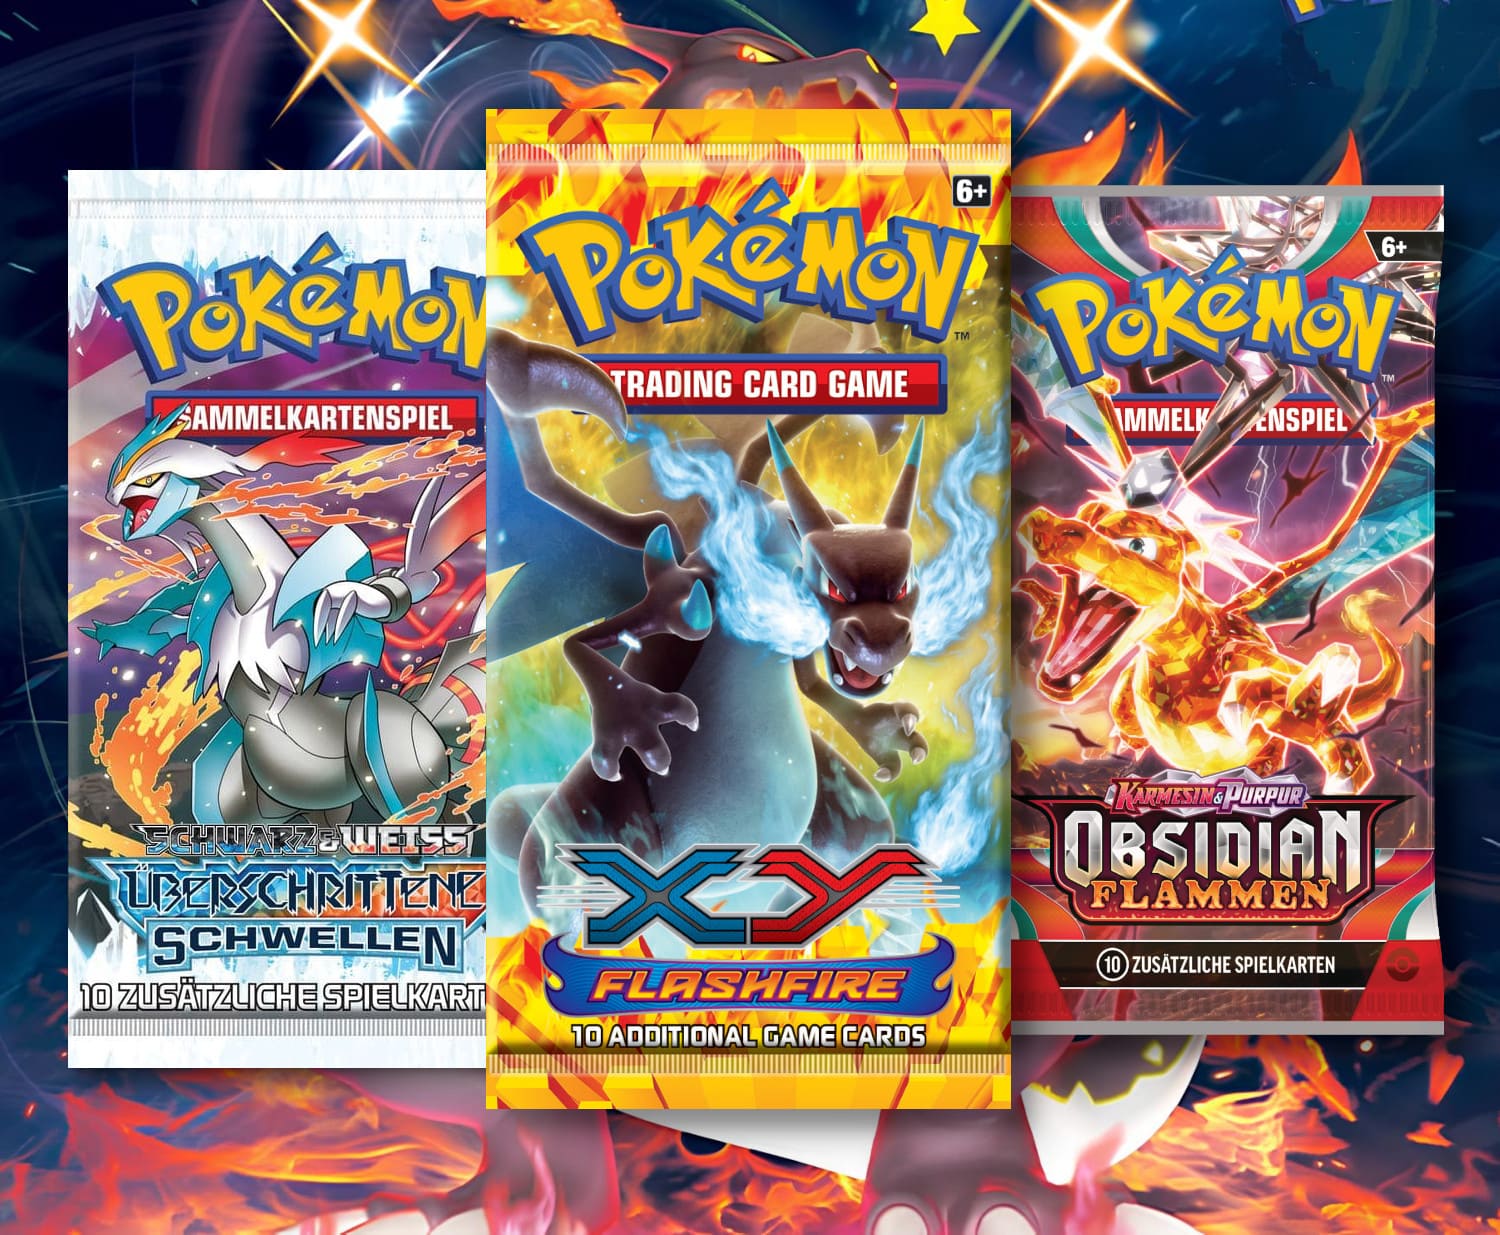 Pokémon-Booster-Packs-Glurak-Karten-Sammelkarten-TCG